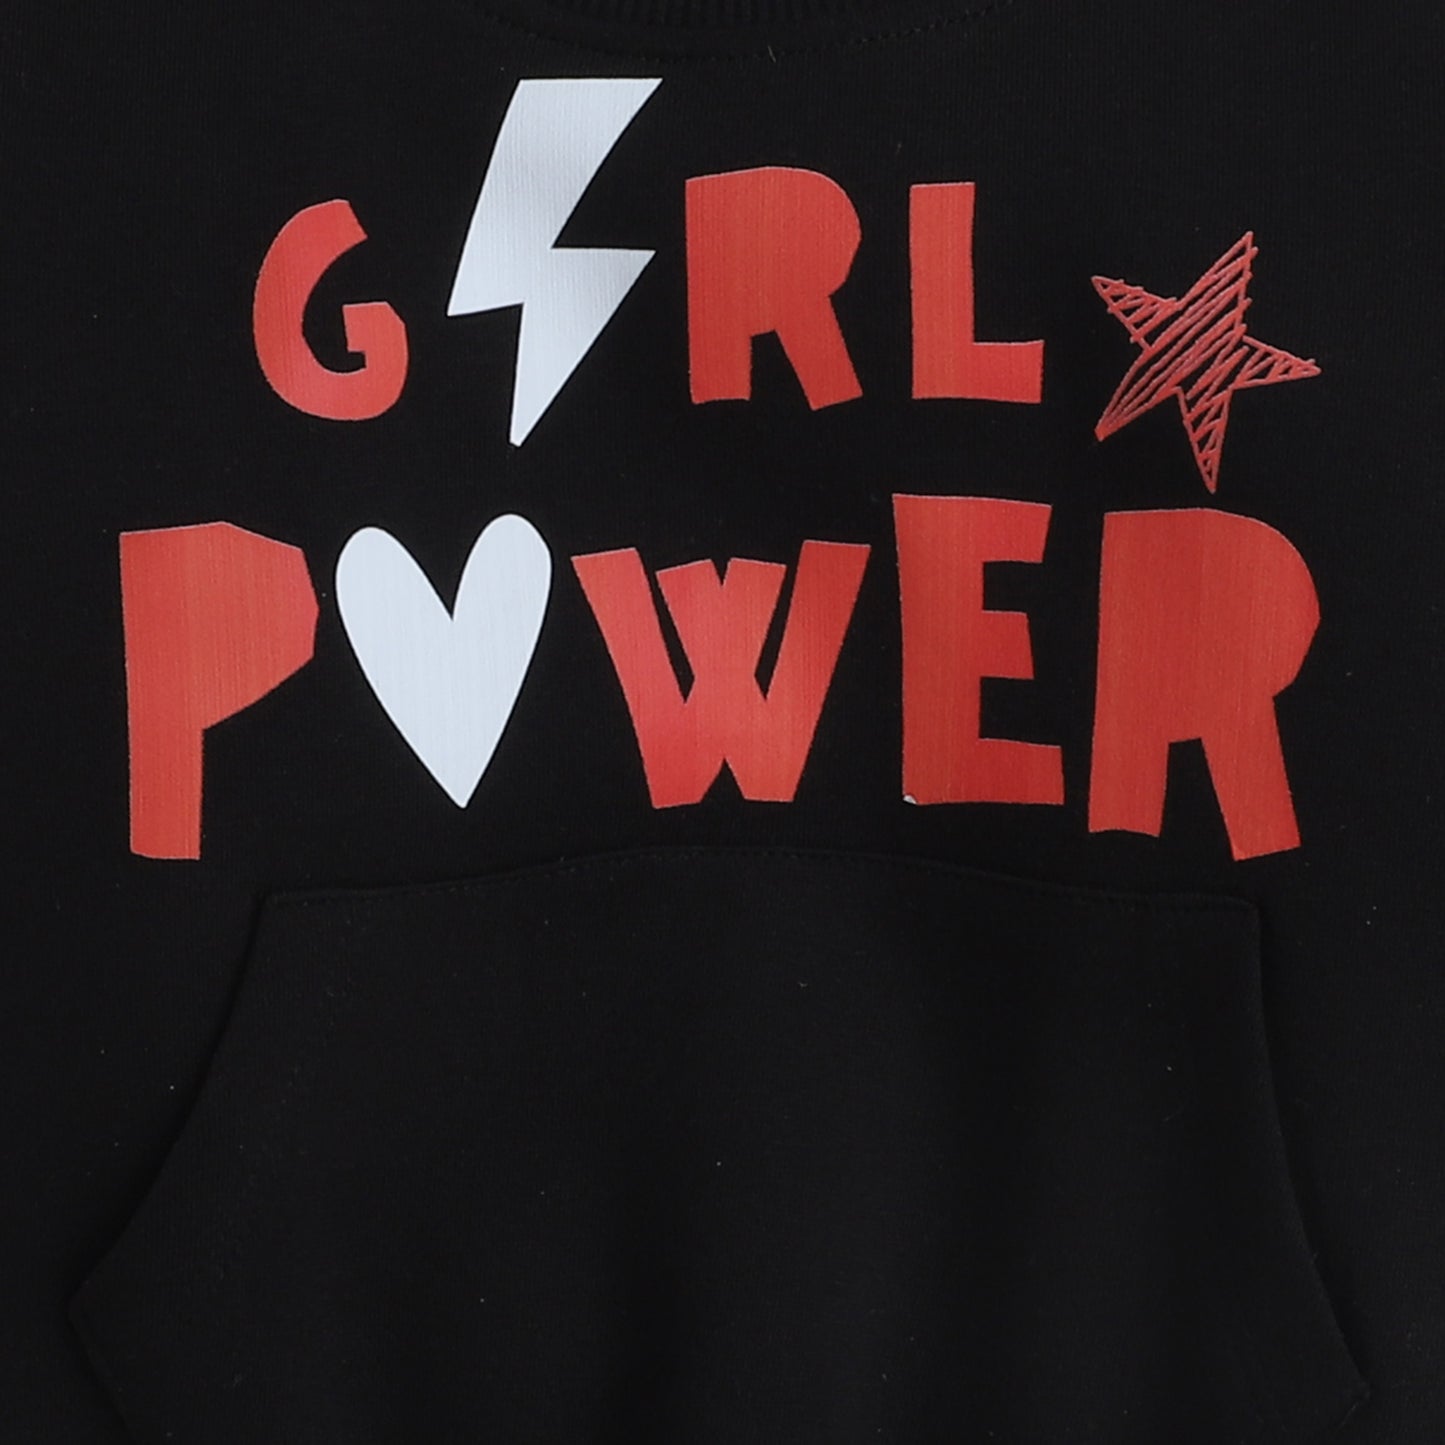 Knitting Doodles Fleece Girl's Black Round Neck Girl Power Print Sweatshirt With Front Pocket- Black